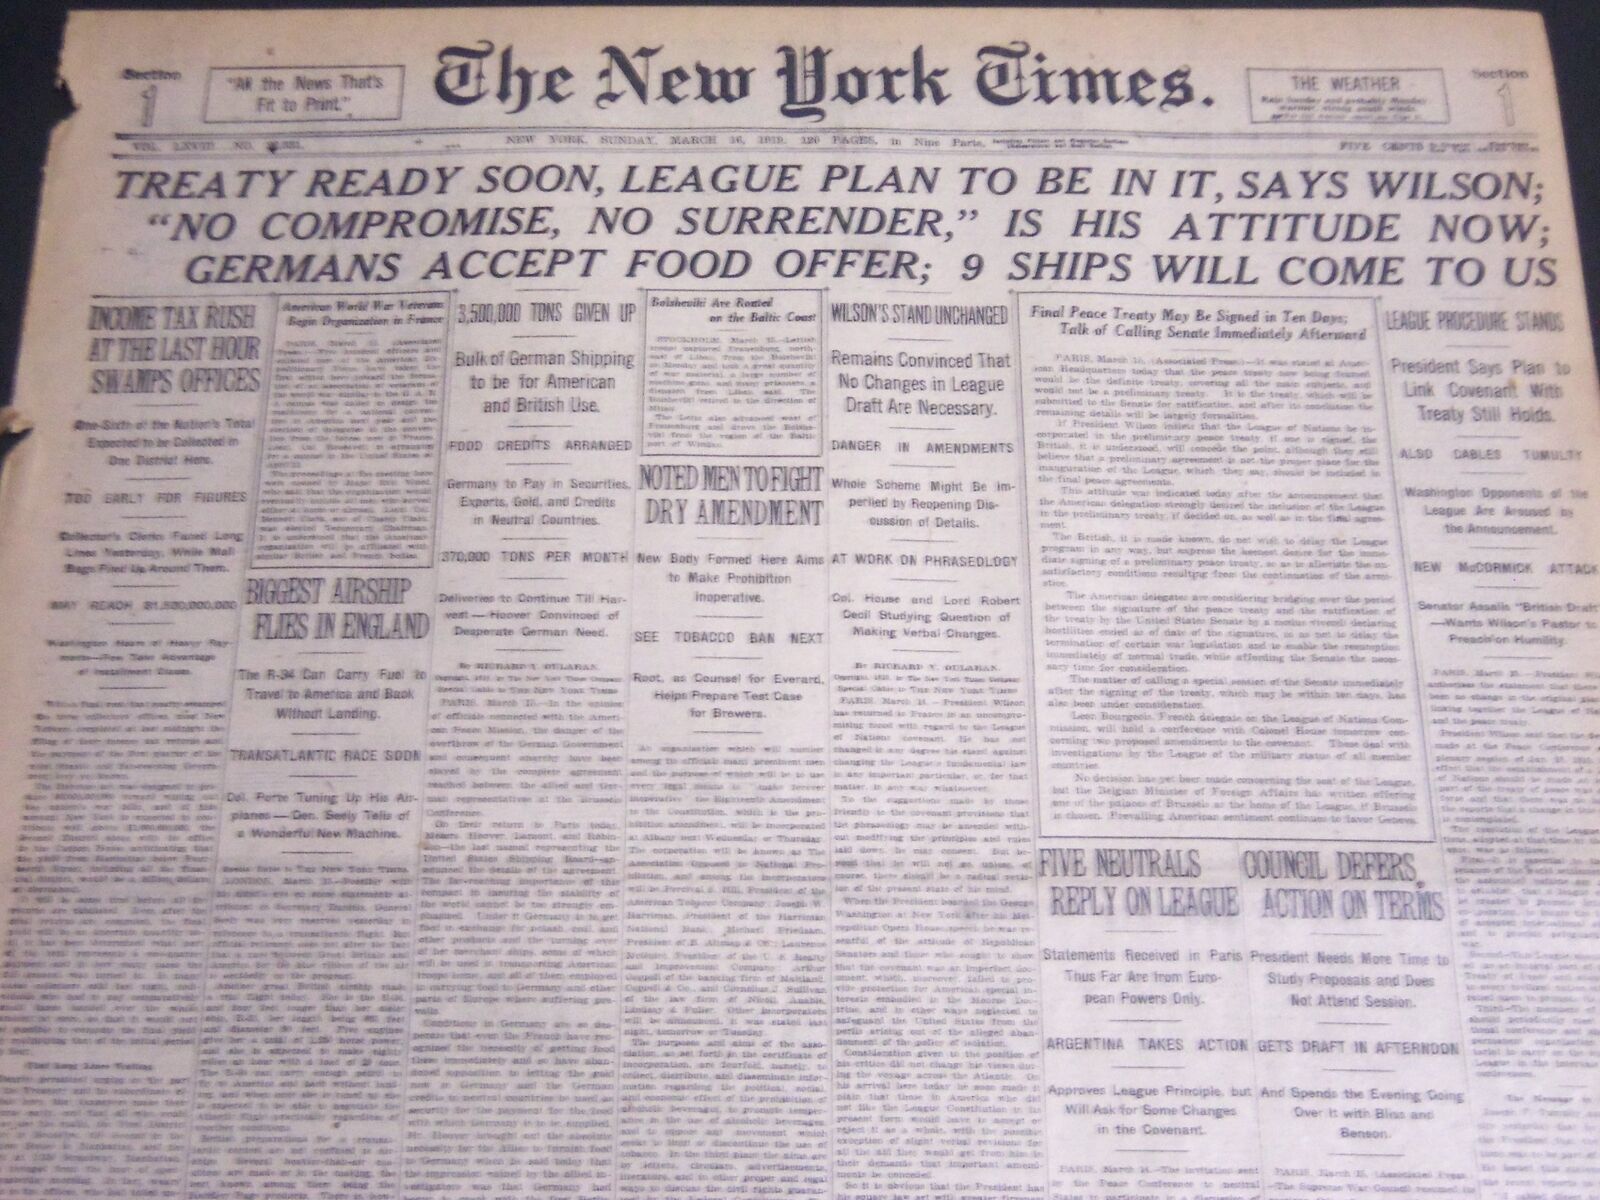 1919 MARCH 16 NEW YORK TIMES - TREATY READY SOON SAYS WILSON - NT 6653